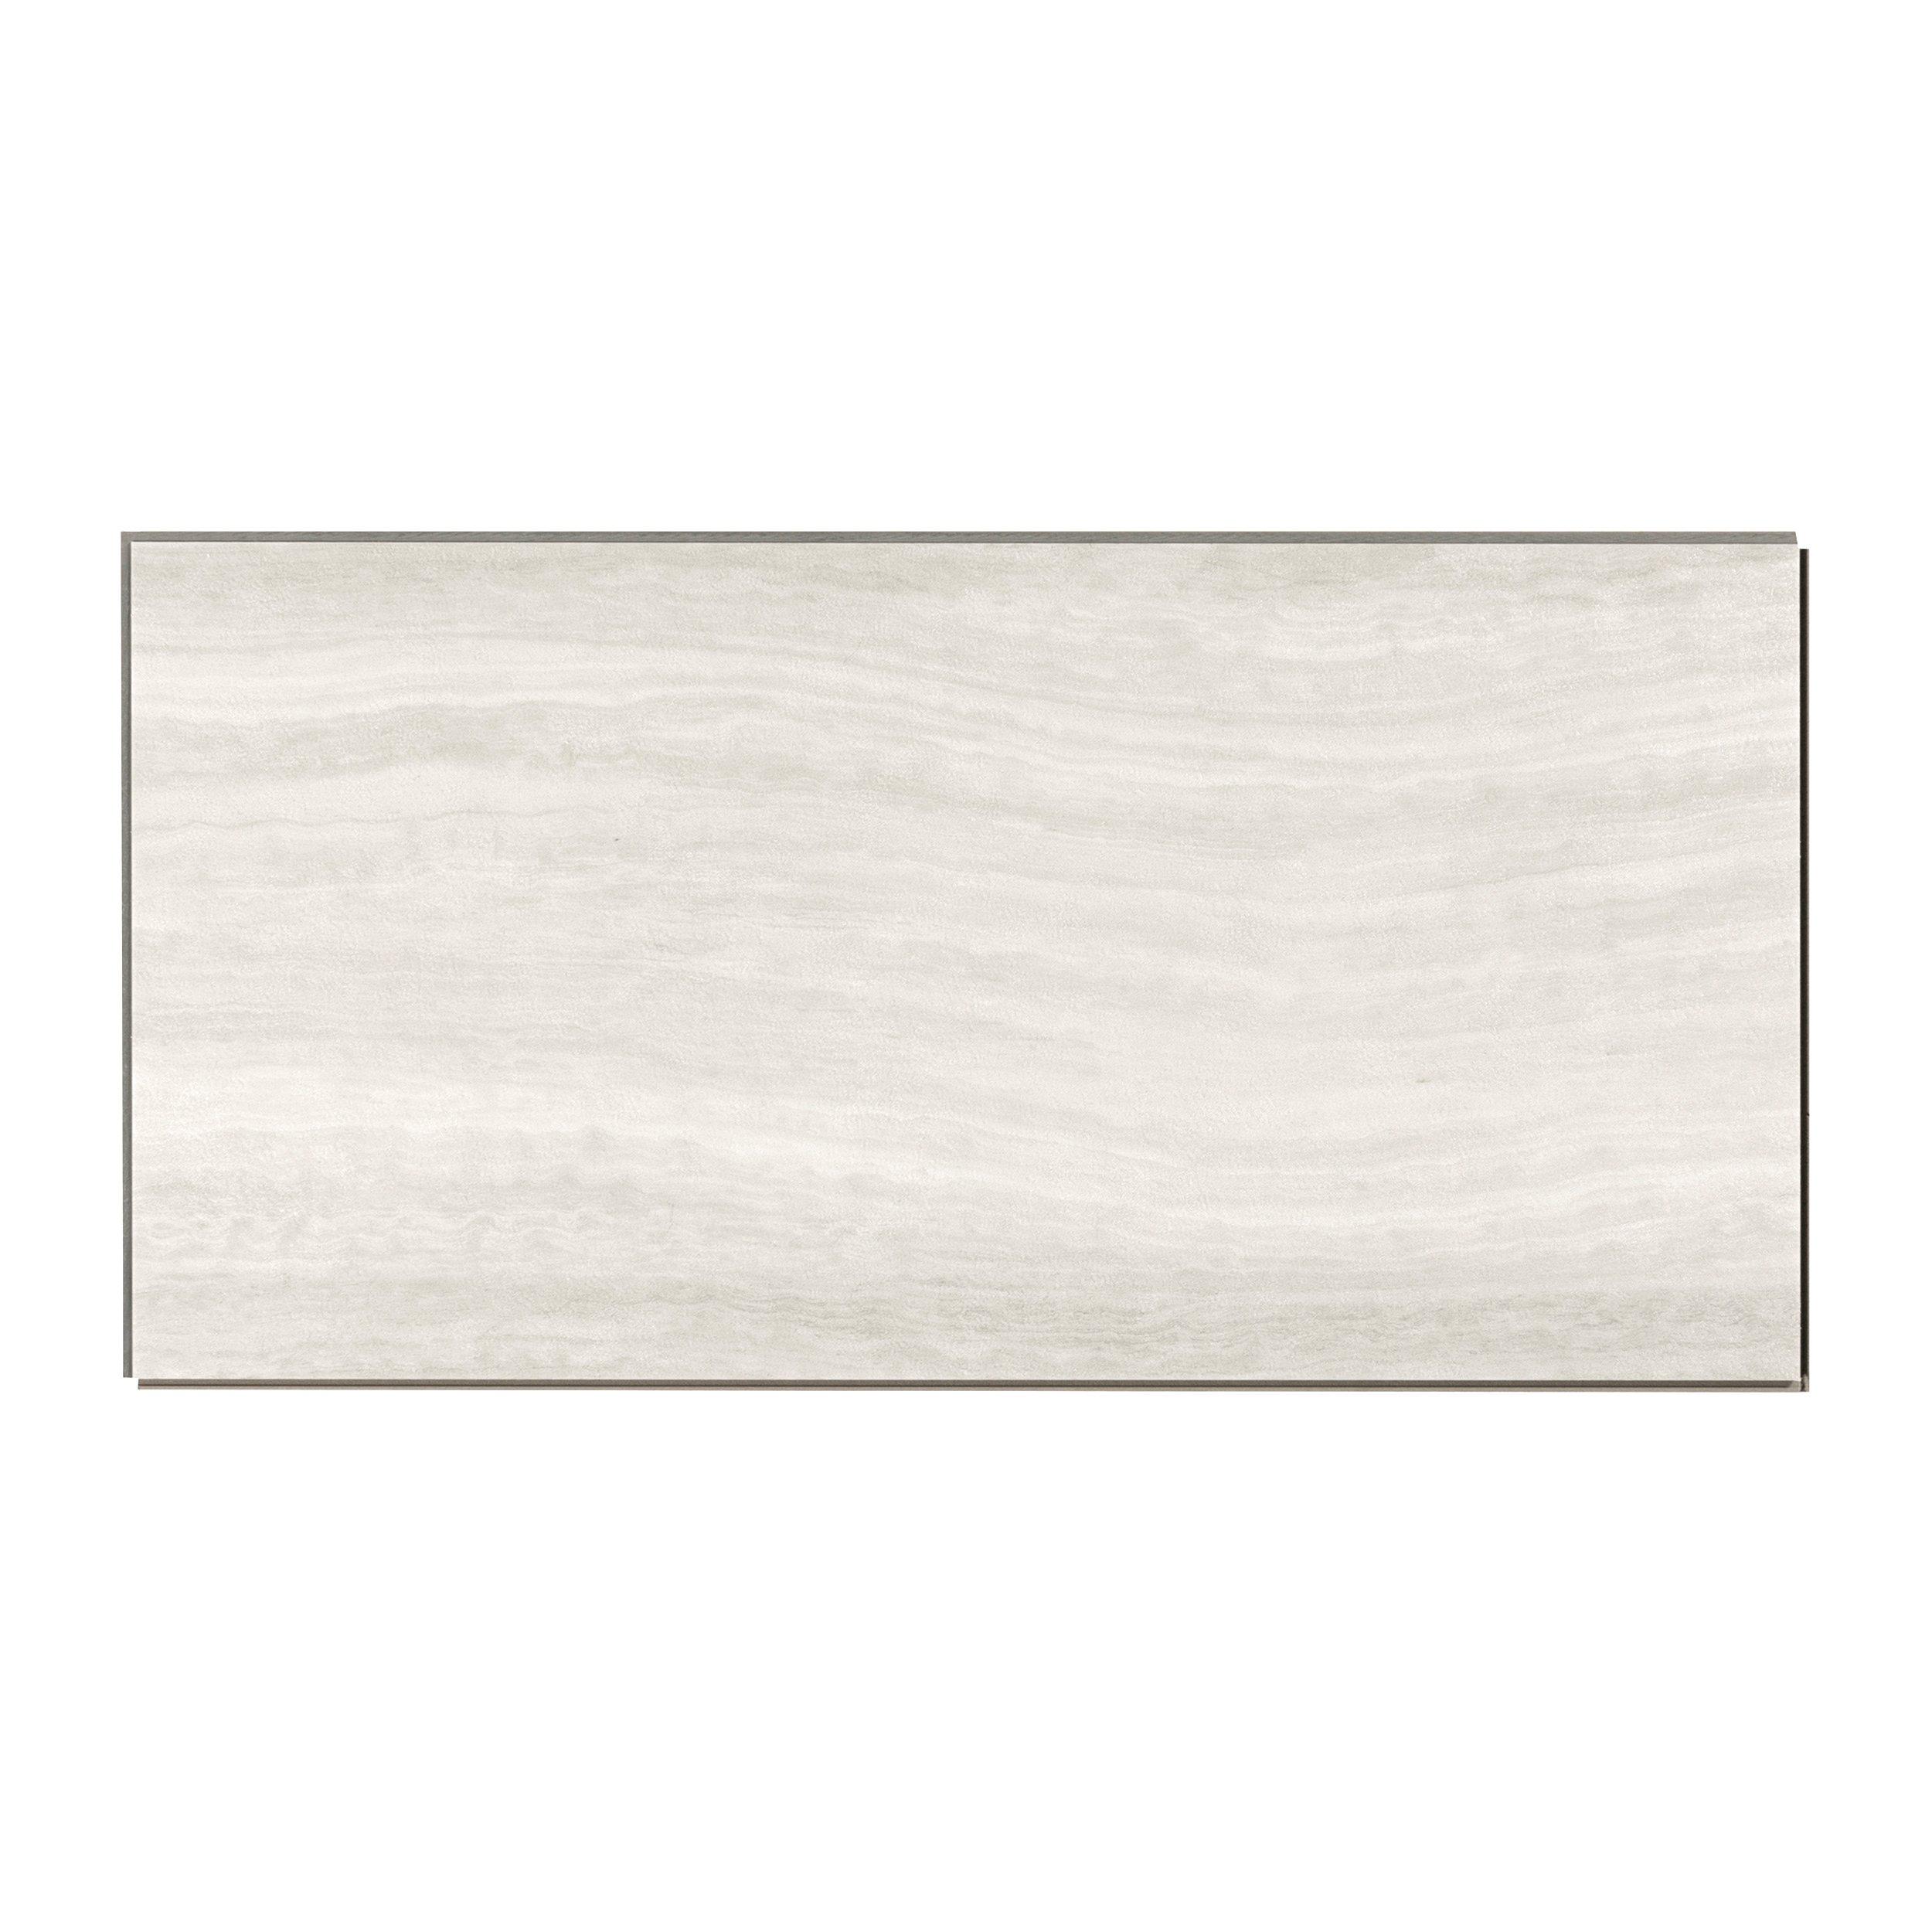 nucore plank cork flooring vinyl floor core decor luxury waterproof tile rigid